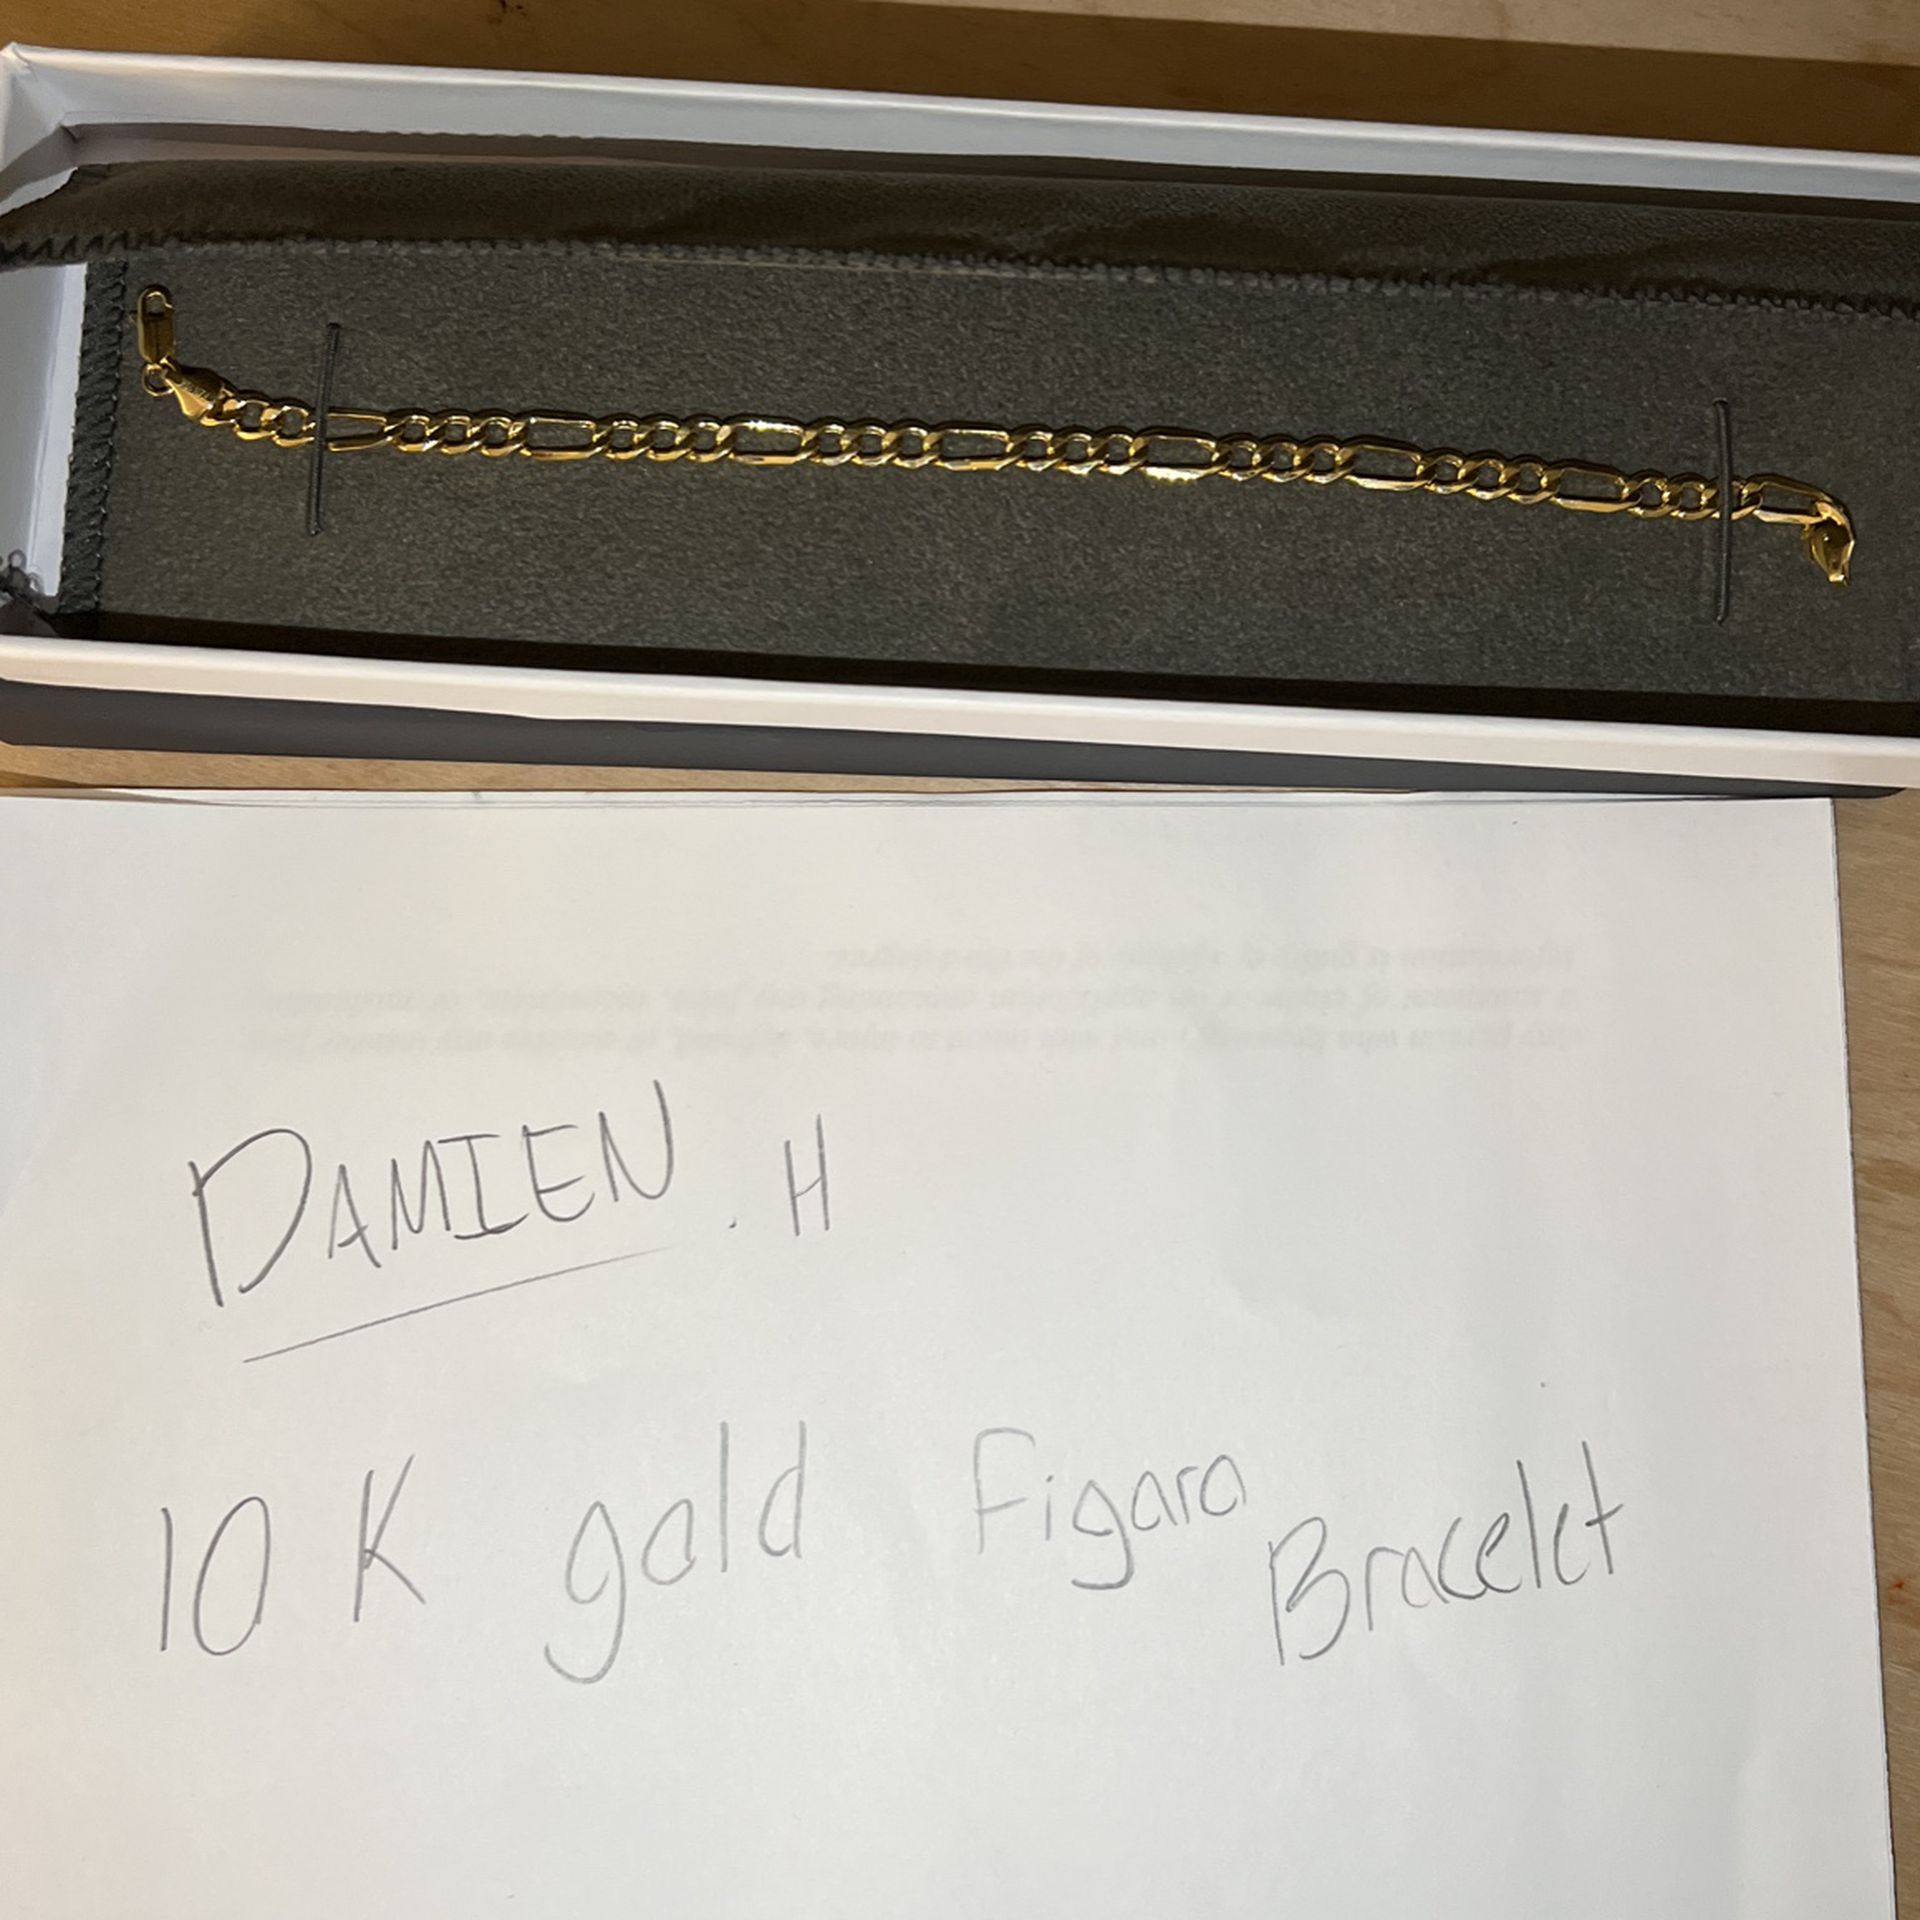 10k Gold Figaro Bracelet 